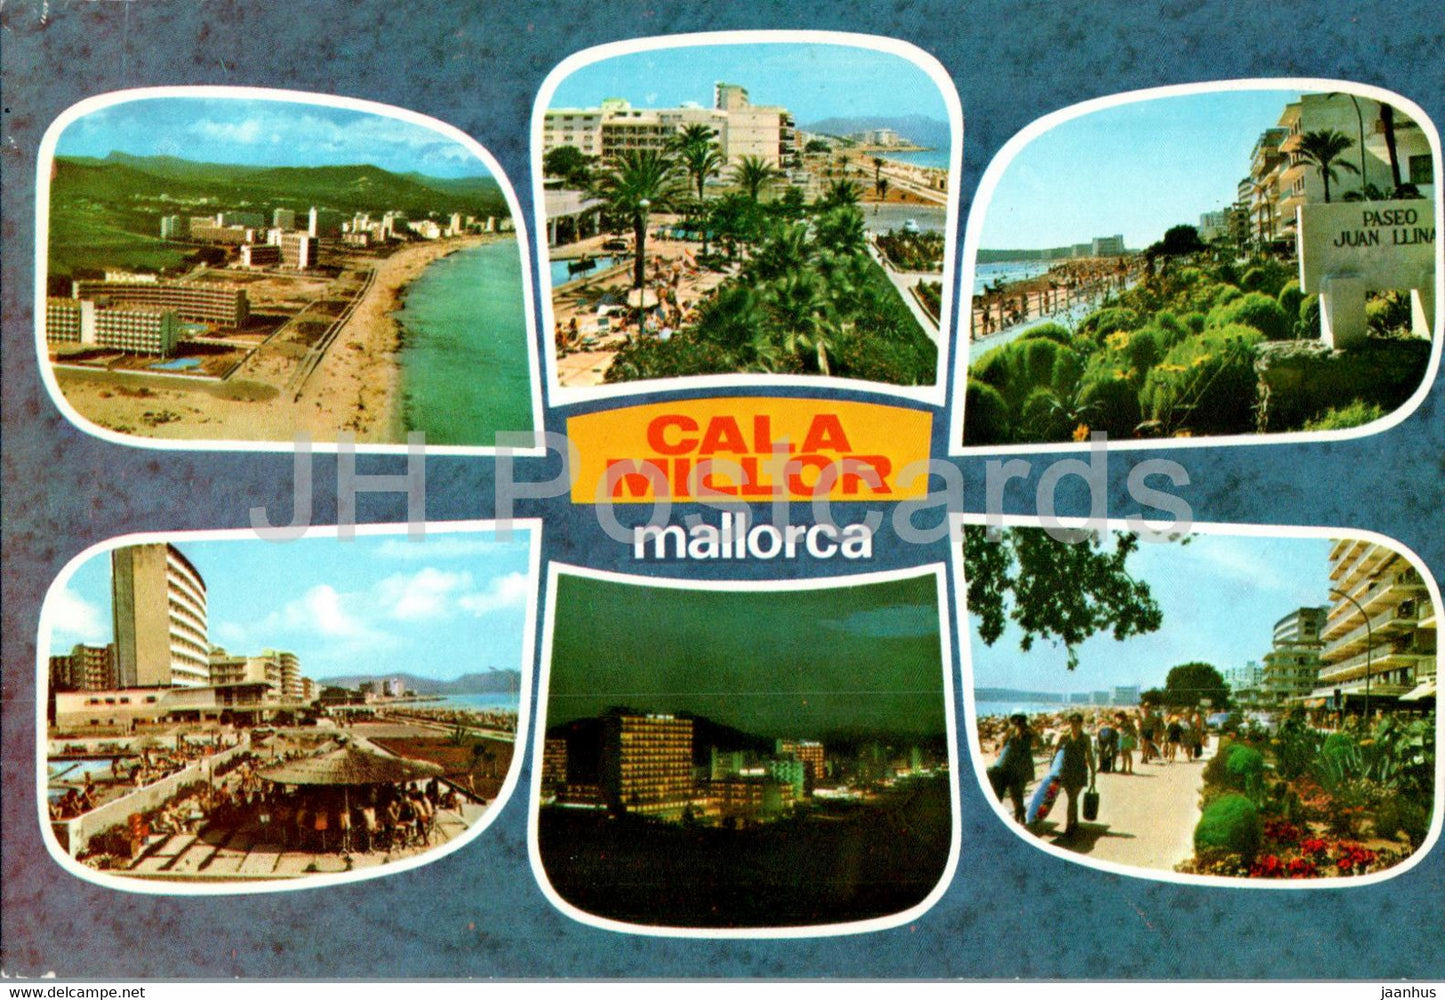 Cala Millor - Mallorca - multiview - 8066 - Spain - unused - JH Postcards